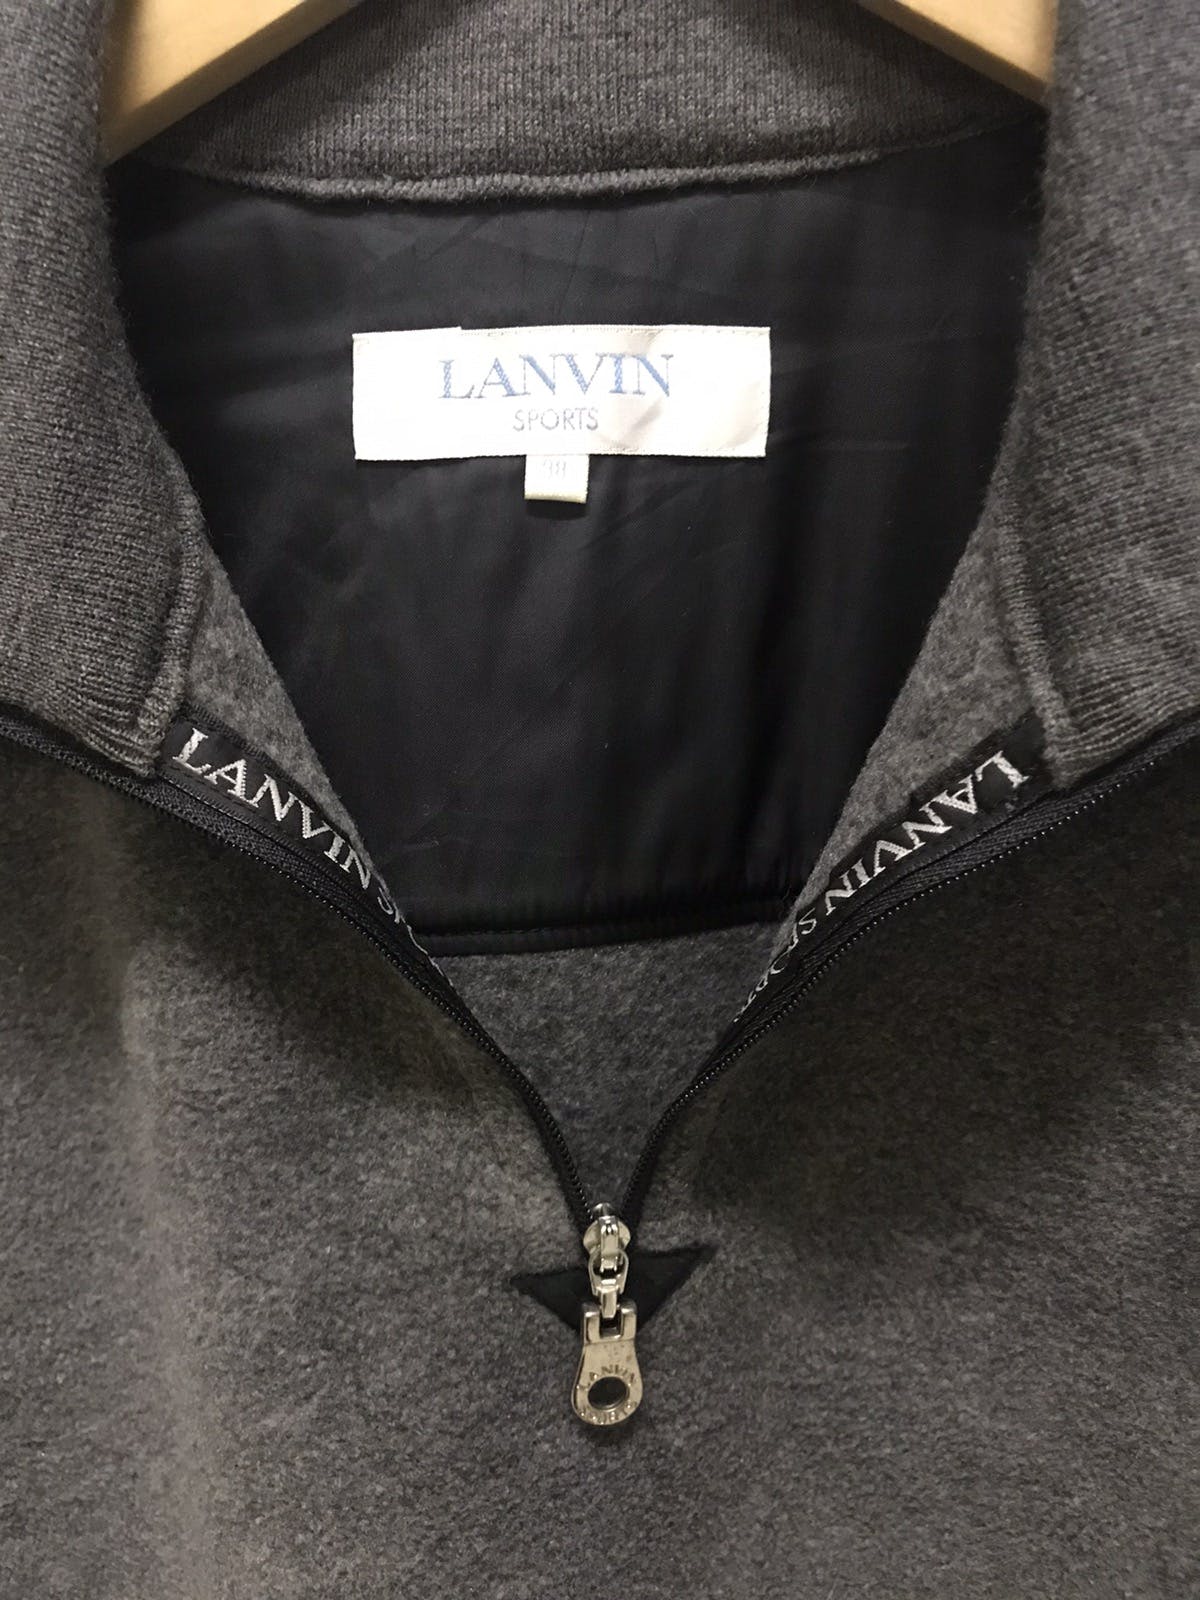 Lanvin sport fleece half zipper - 6